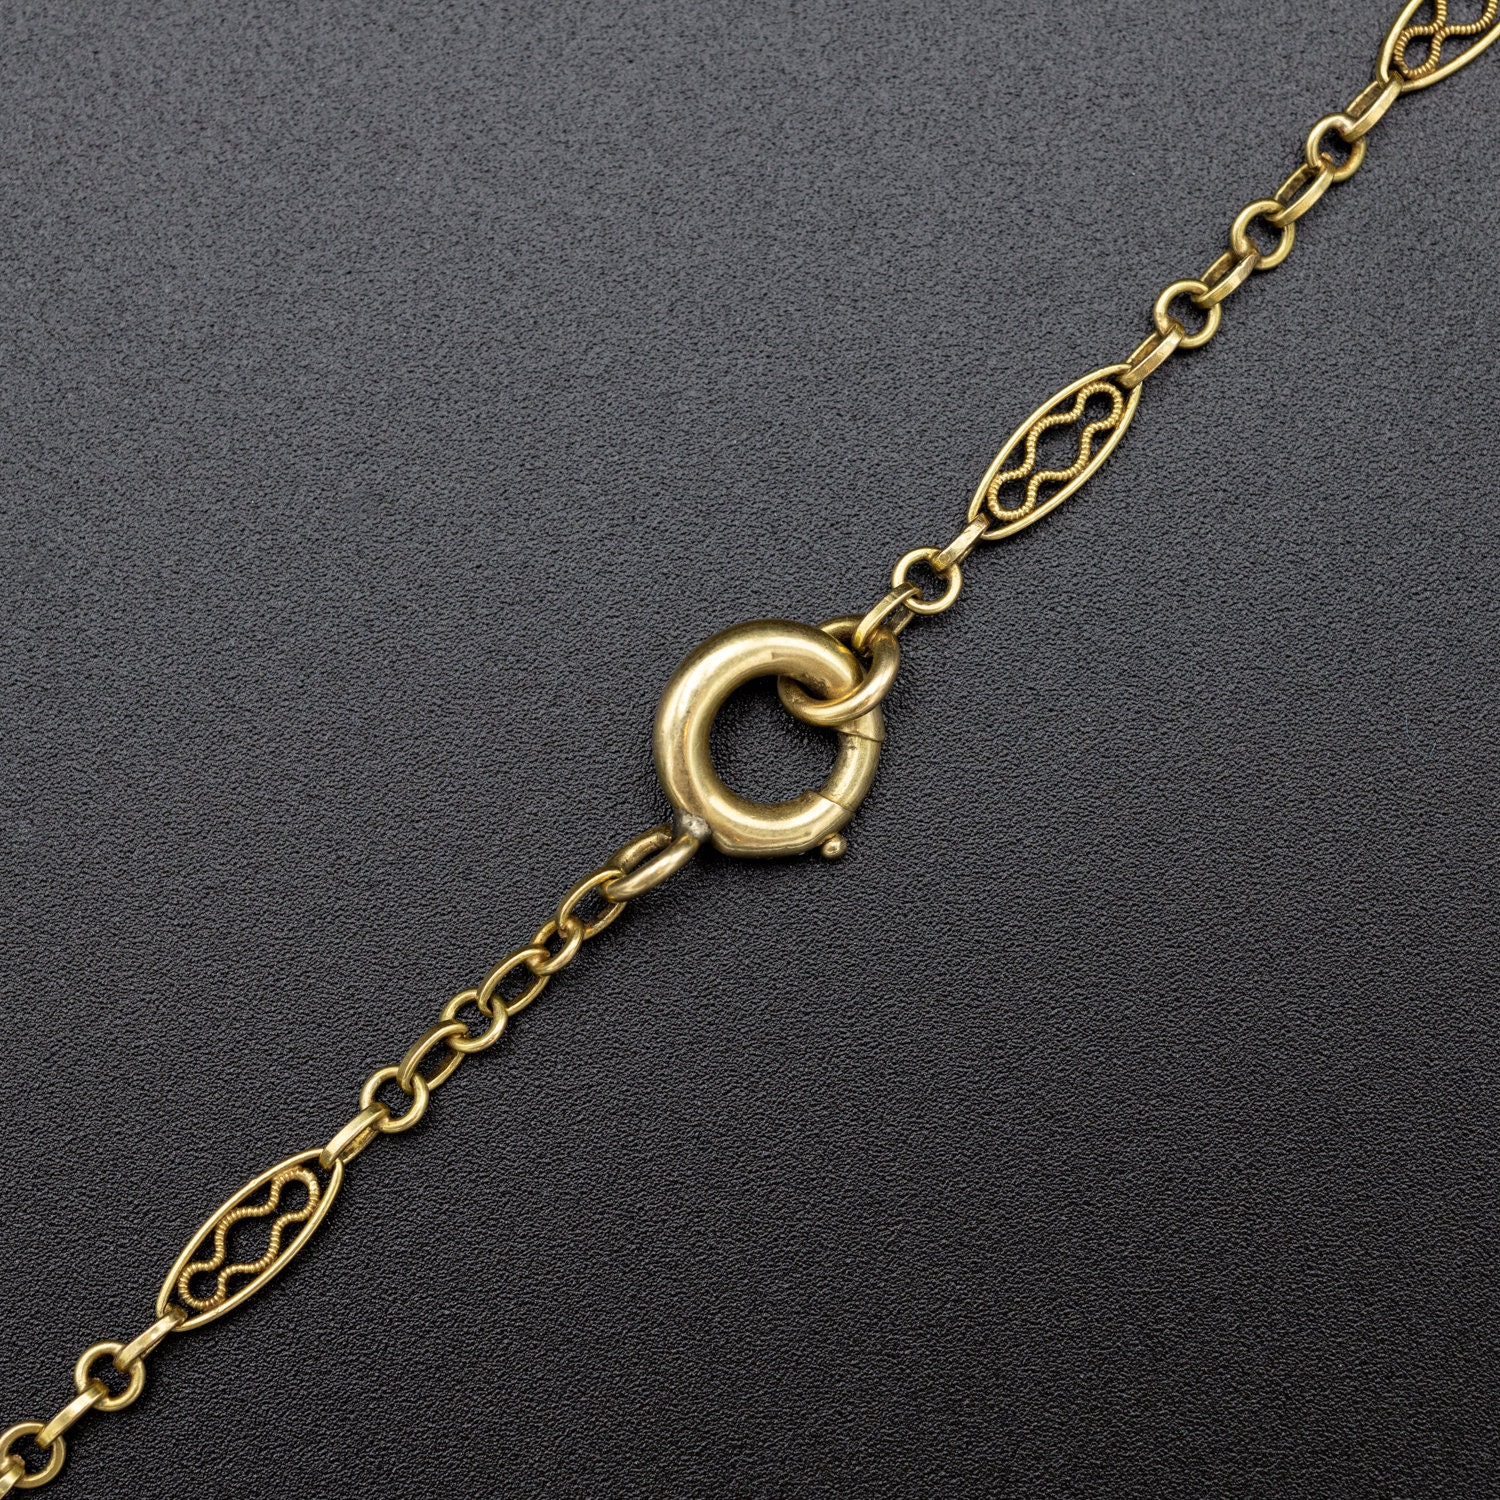 Yellow gold Sautoir antique closures 18 ct gold necklace | Etsy